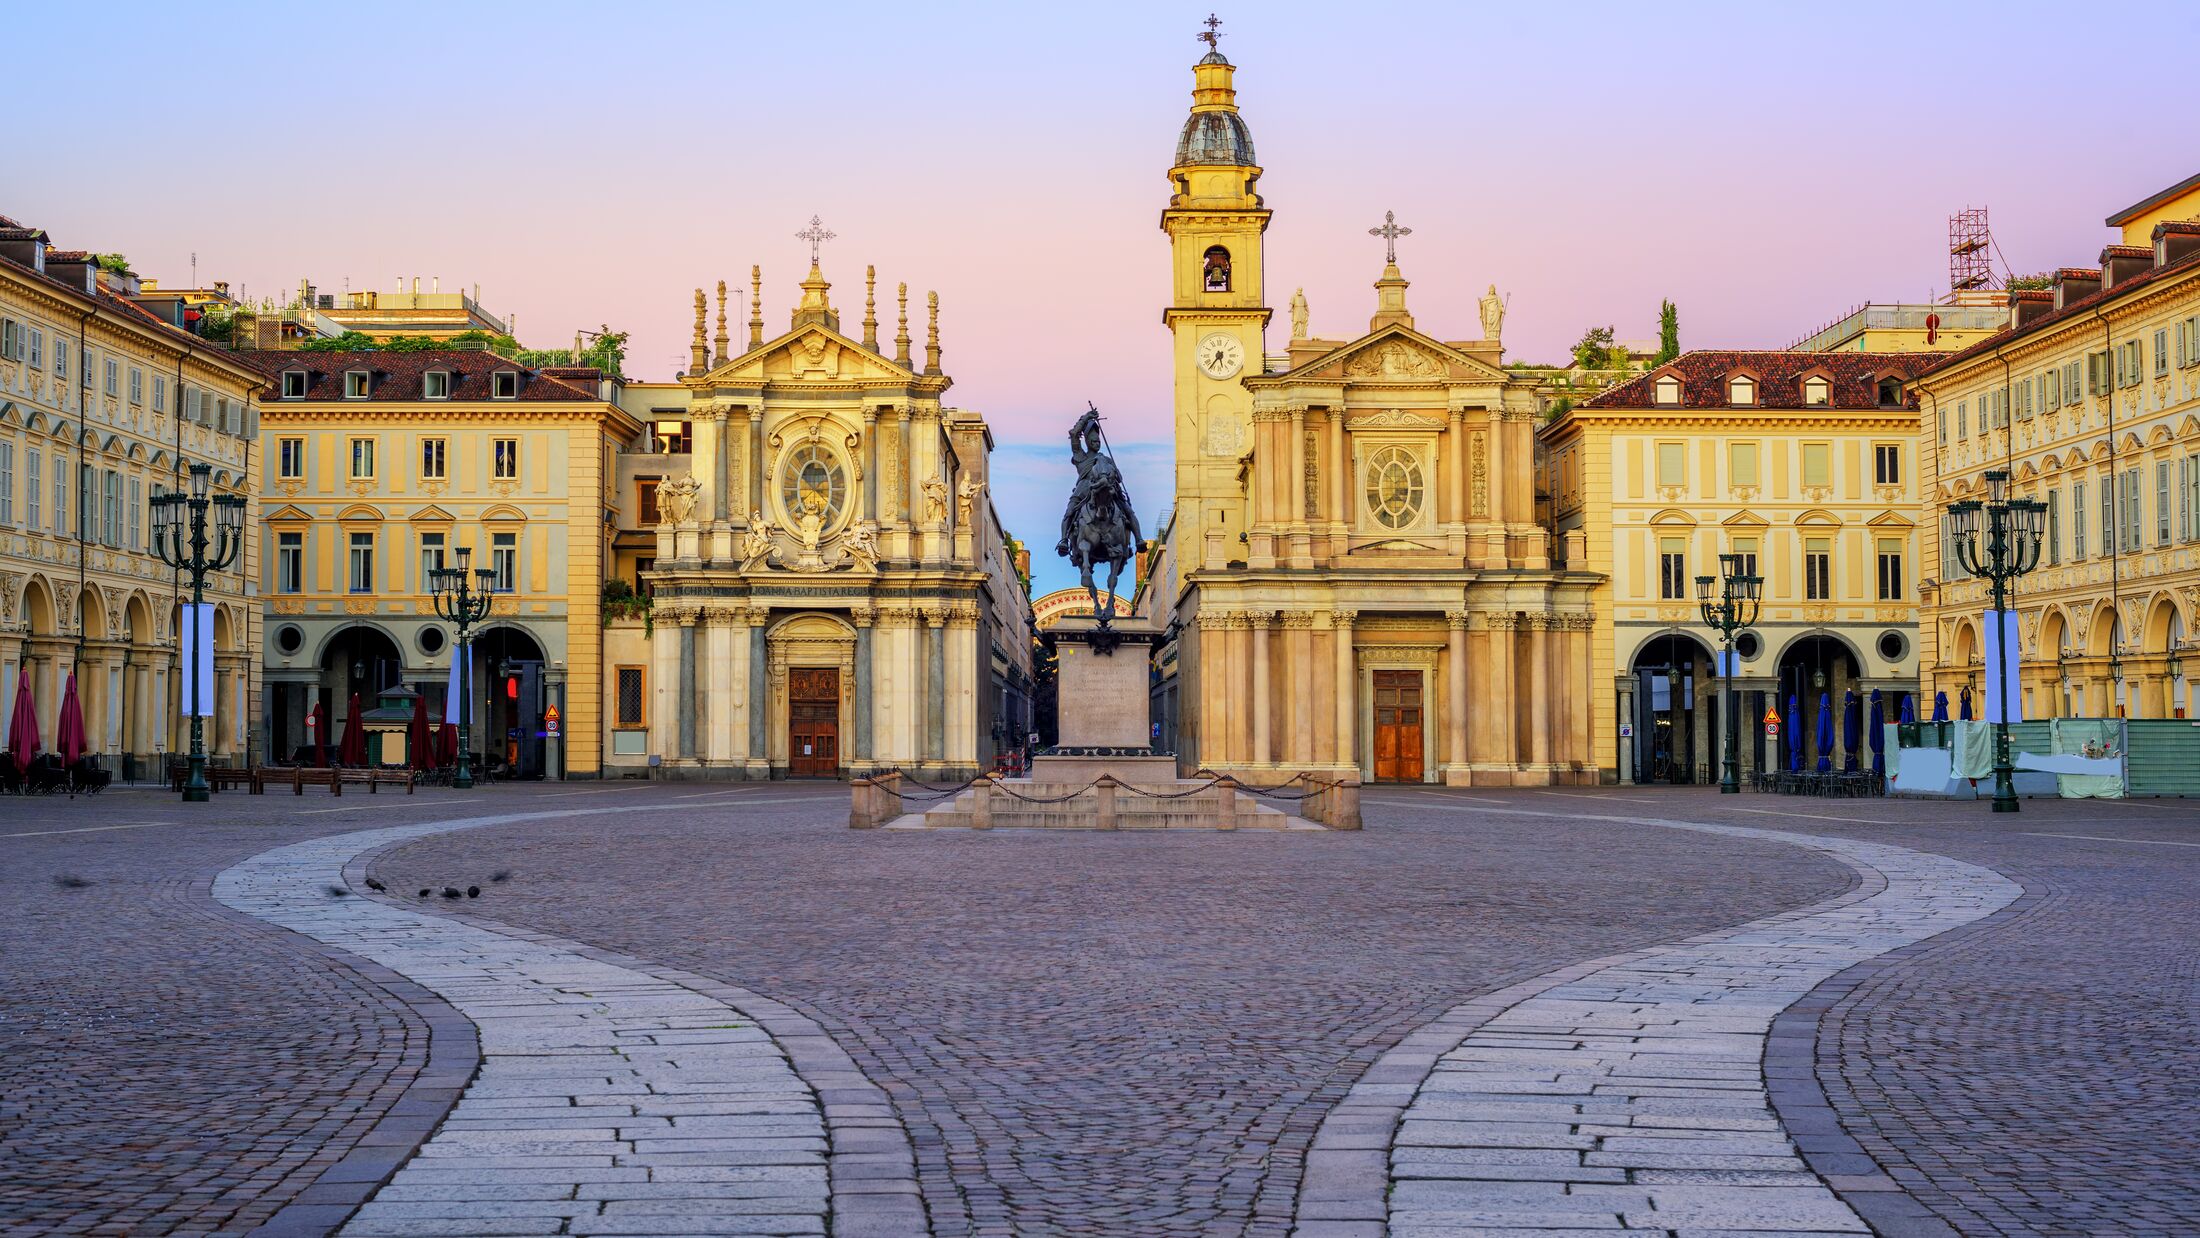 Piazza San Carlo square and twin churches of Santa Cristina and San Carlo Borromeo in the Old Town center of Turin, Italy, on sunrise